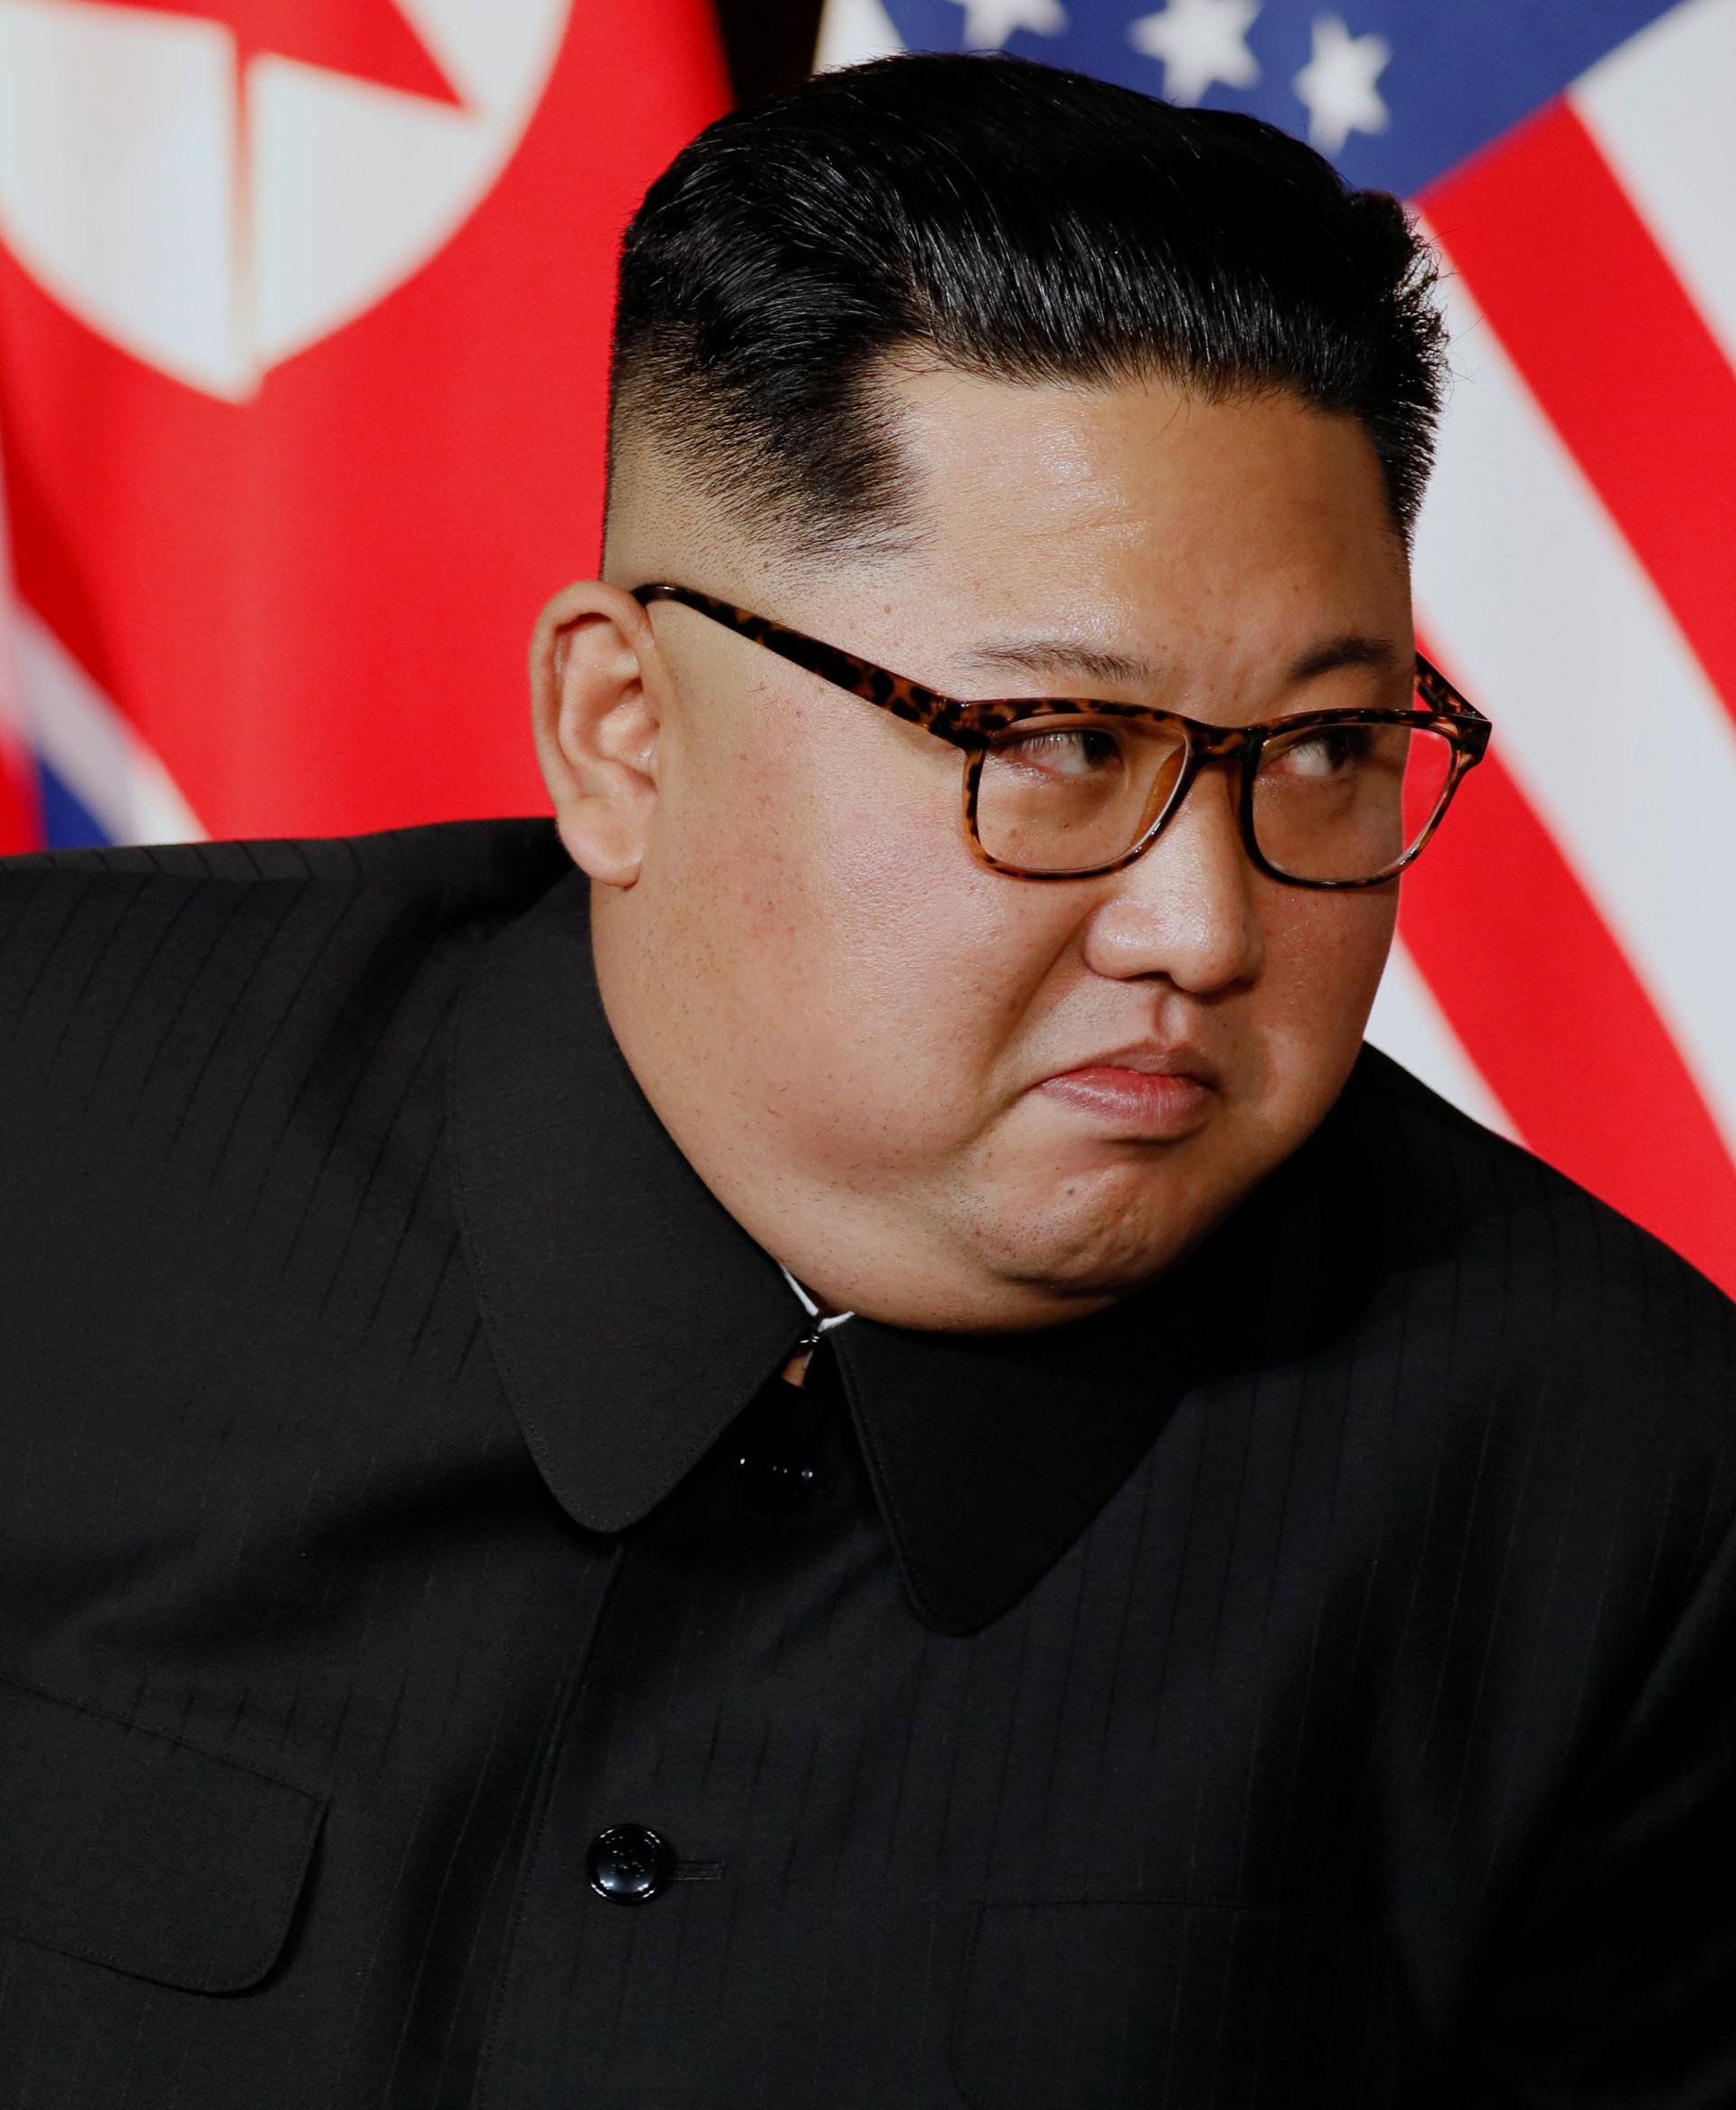 North Korea's leader Kim Jong Un looks at U.S. President Donald Trump before their meeting in Singapore